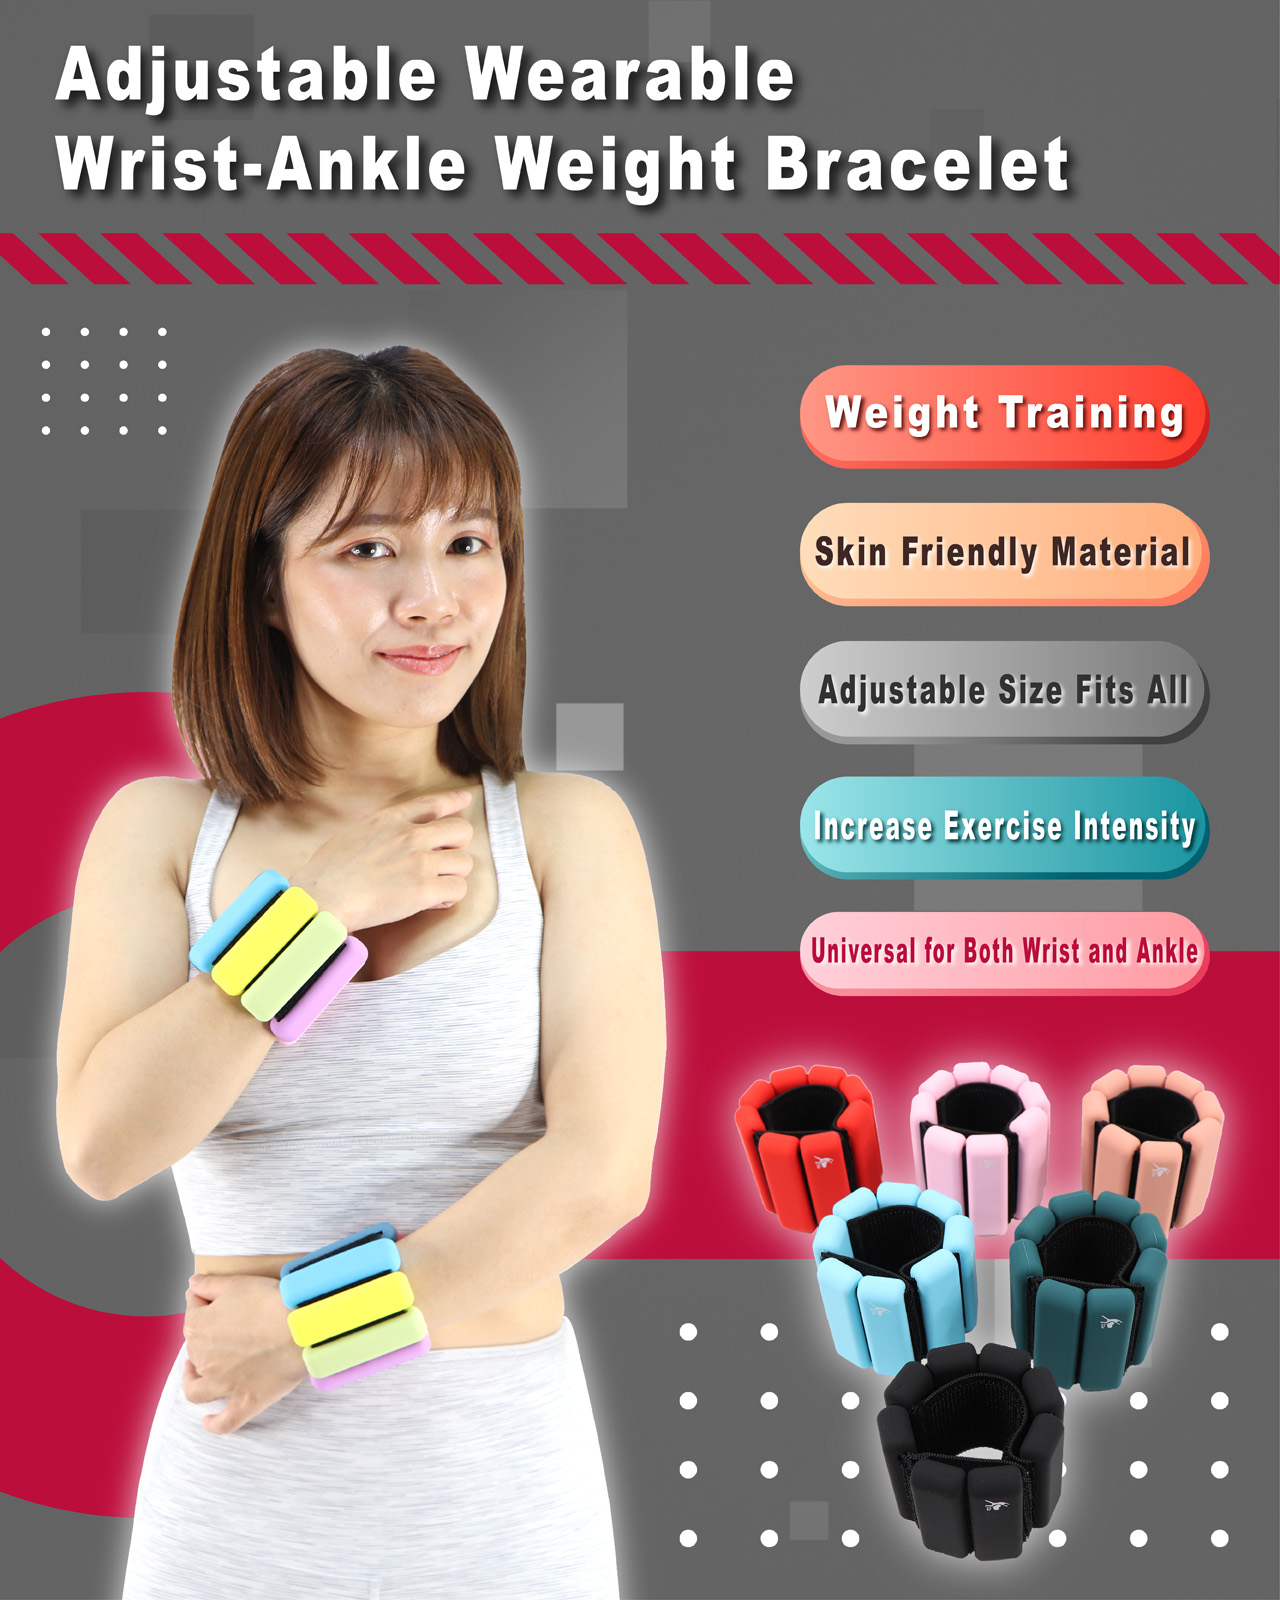 Instructions - Adjustable Wearable Wrist-Ankle Weight Bracelet